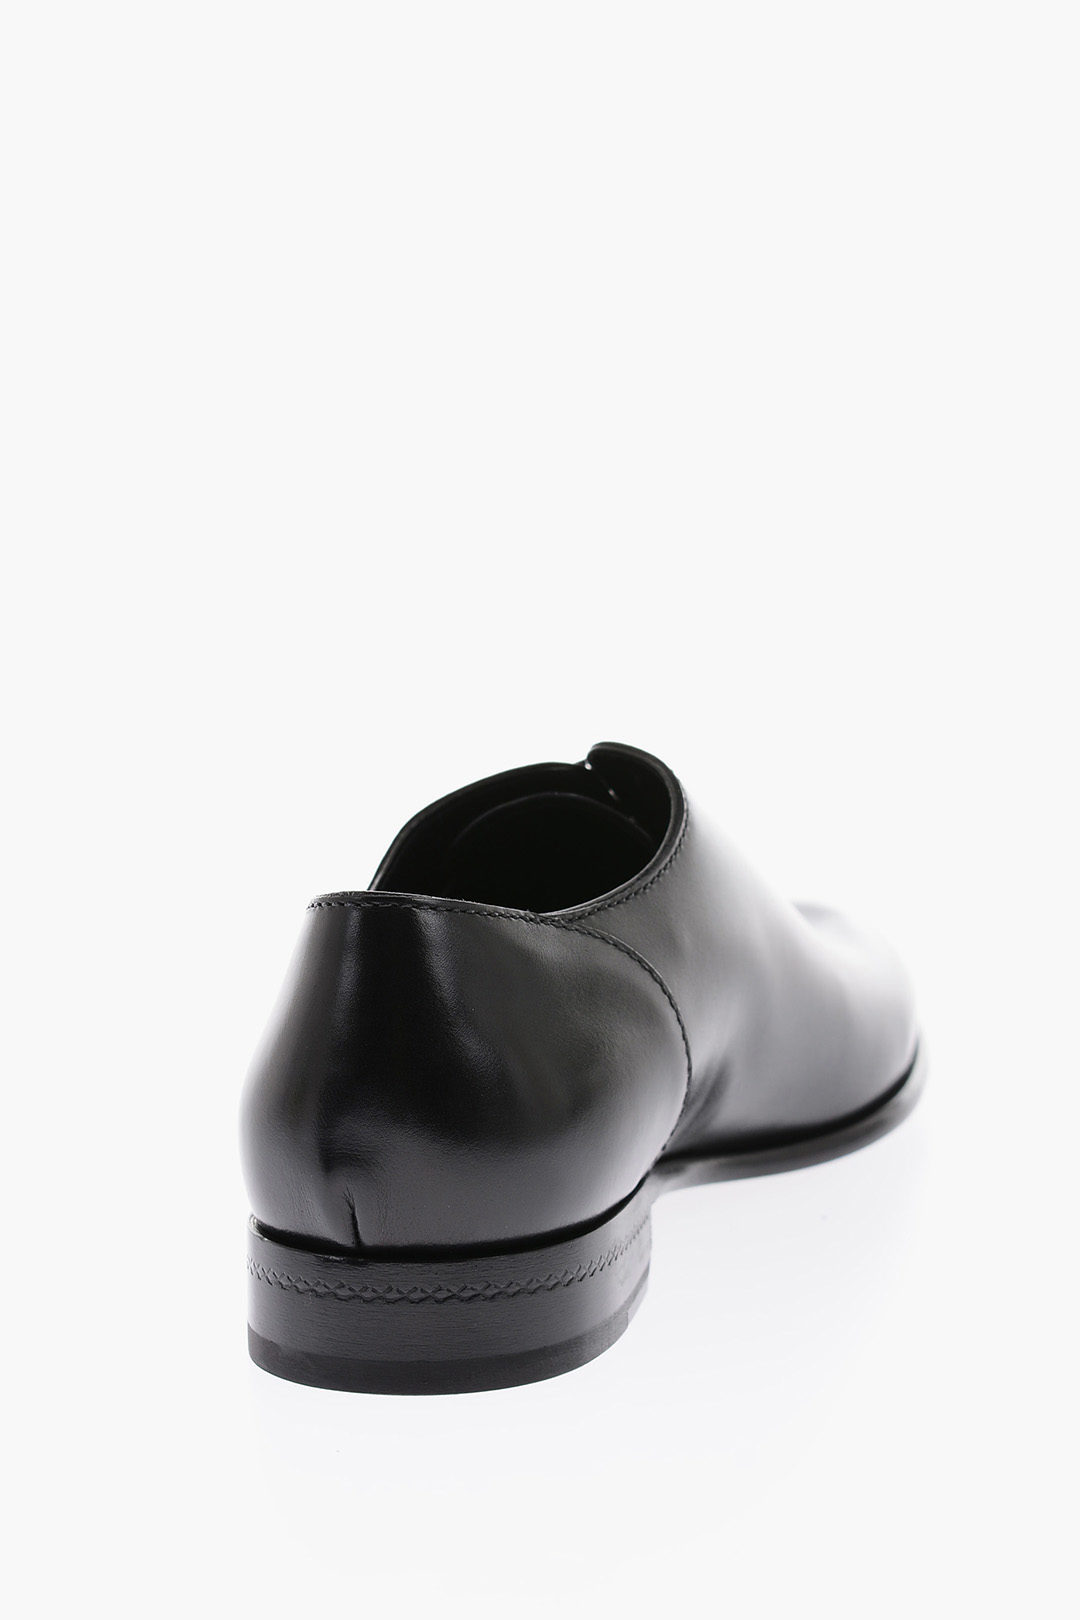 Ermenegildo Zegna Leather VIENNA EVENING Oxford Shoes men - Glamood Outlet